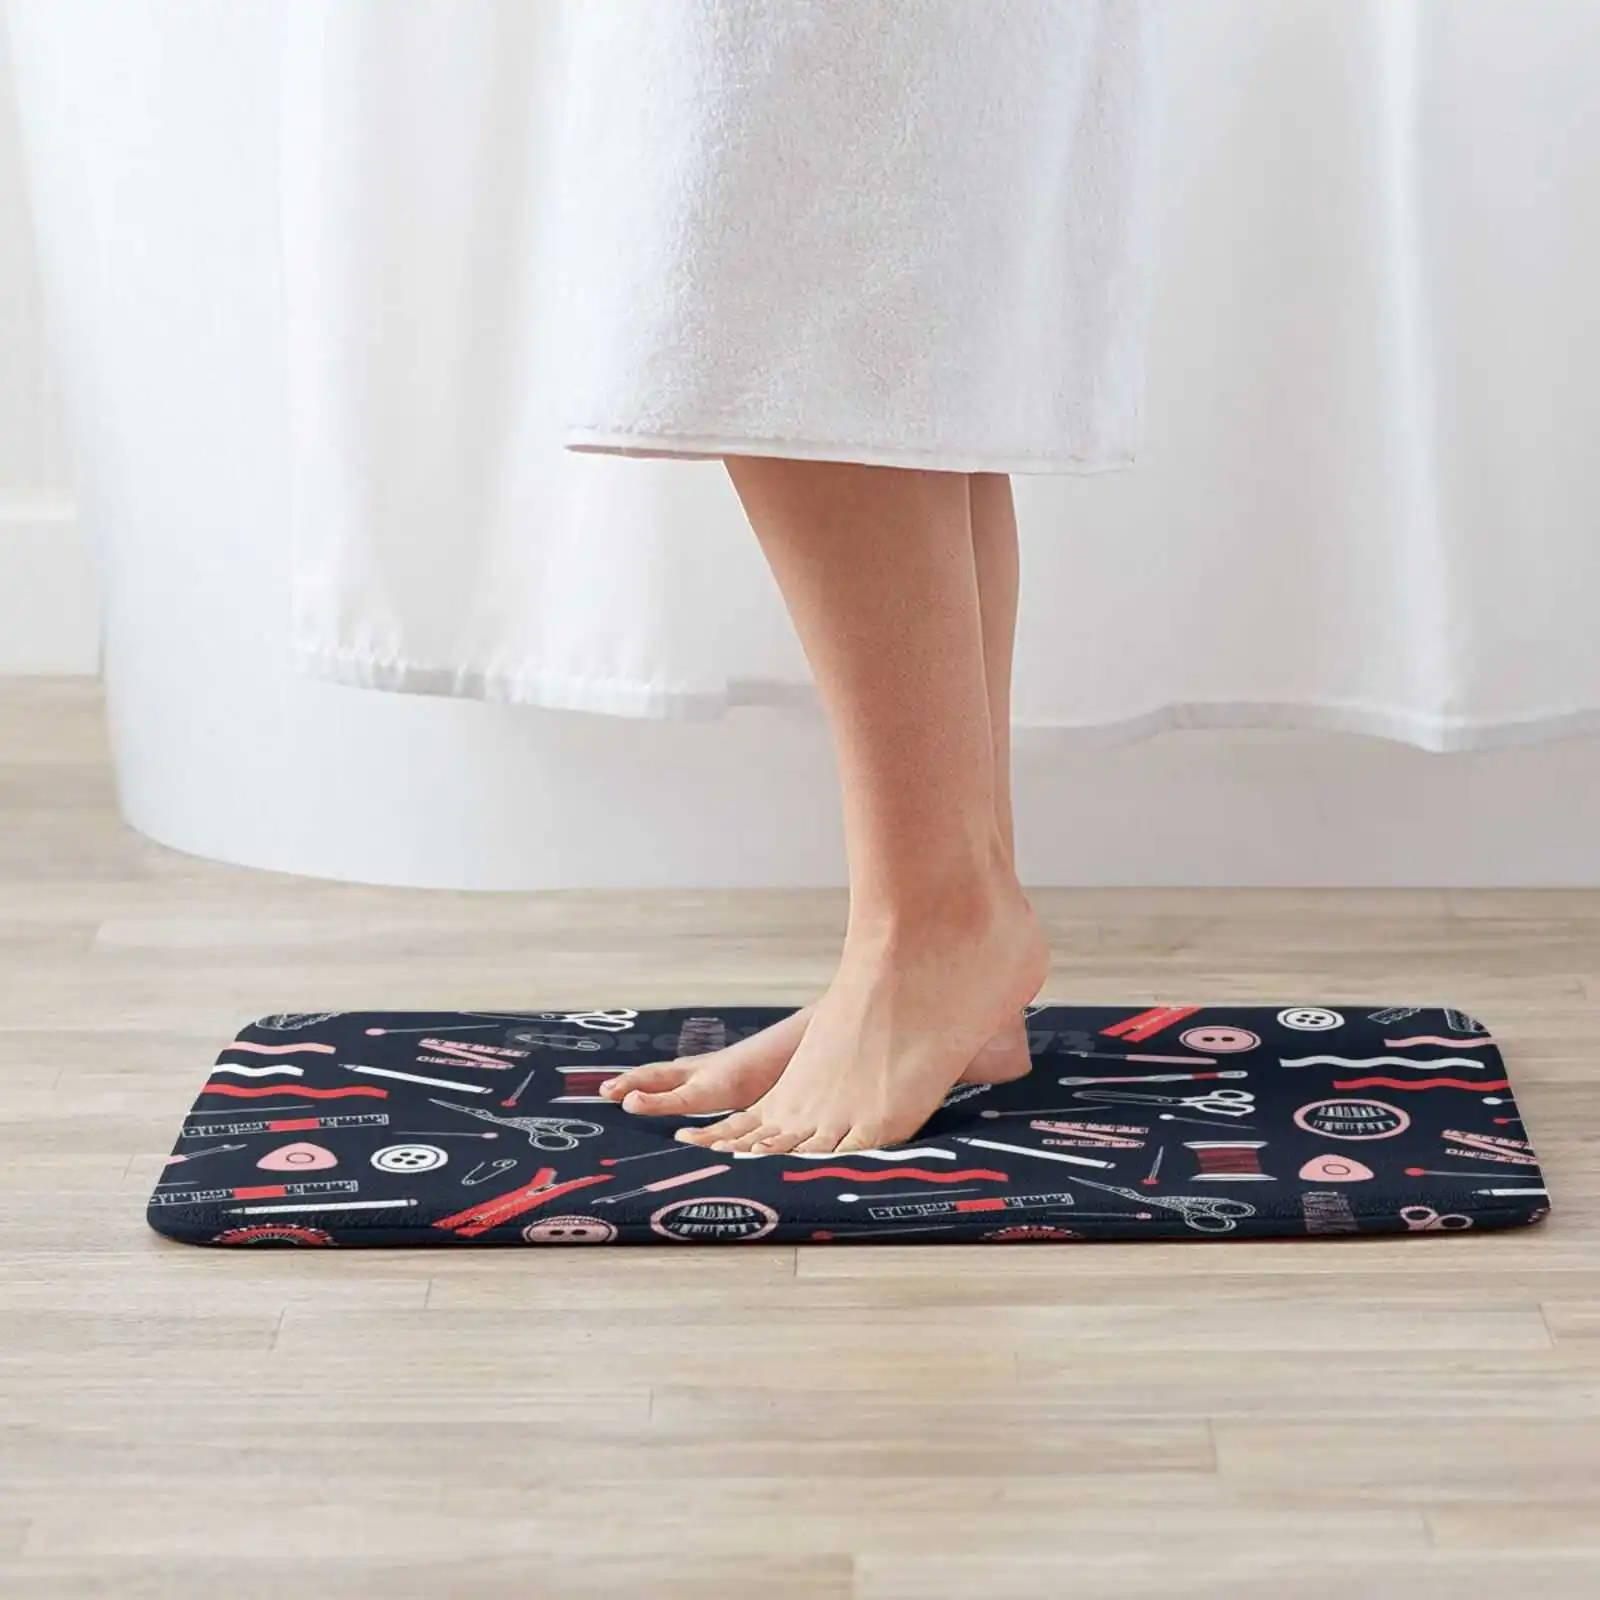 The Pink Singer Sewing Machine Doormat Carpet Mat Rug Polyester Anti-slip  Floor Decor Bath Bathroom Kitchen Bedroom 40*60 - AliExpress